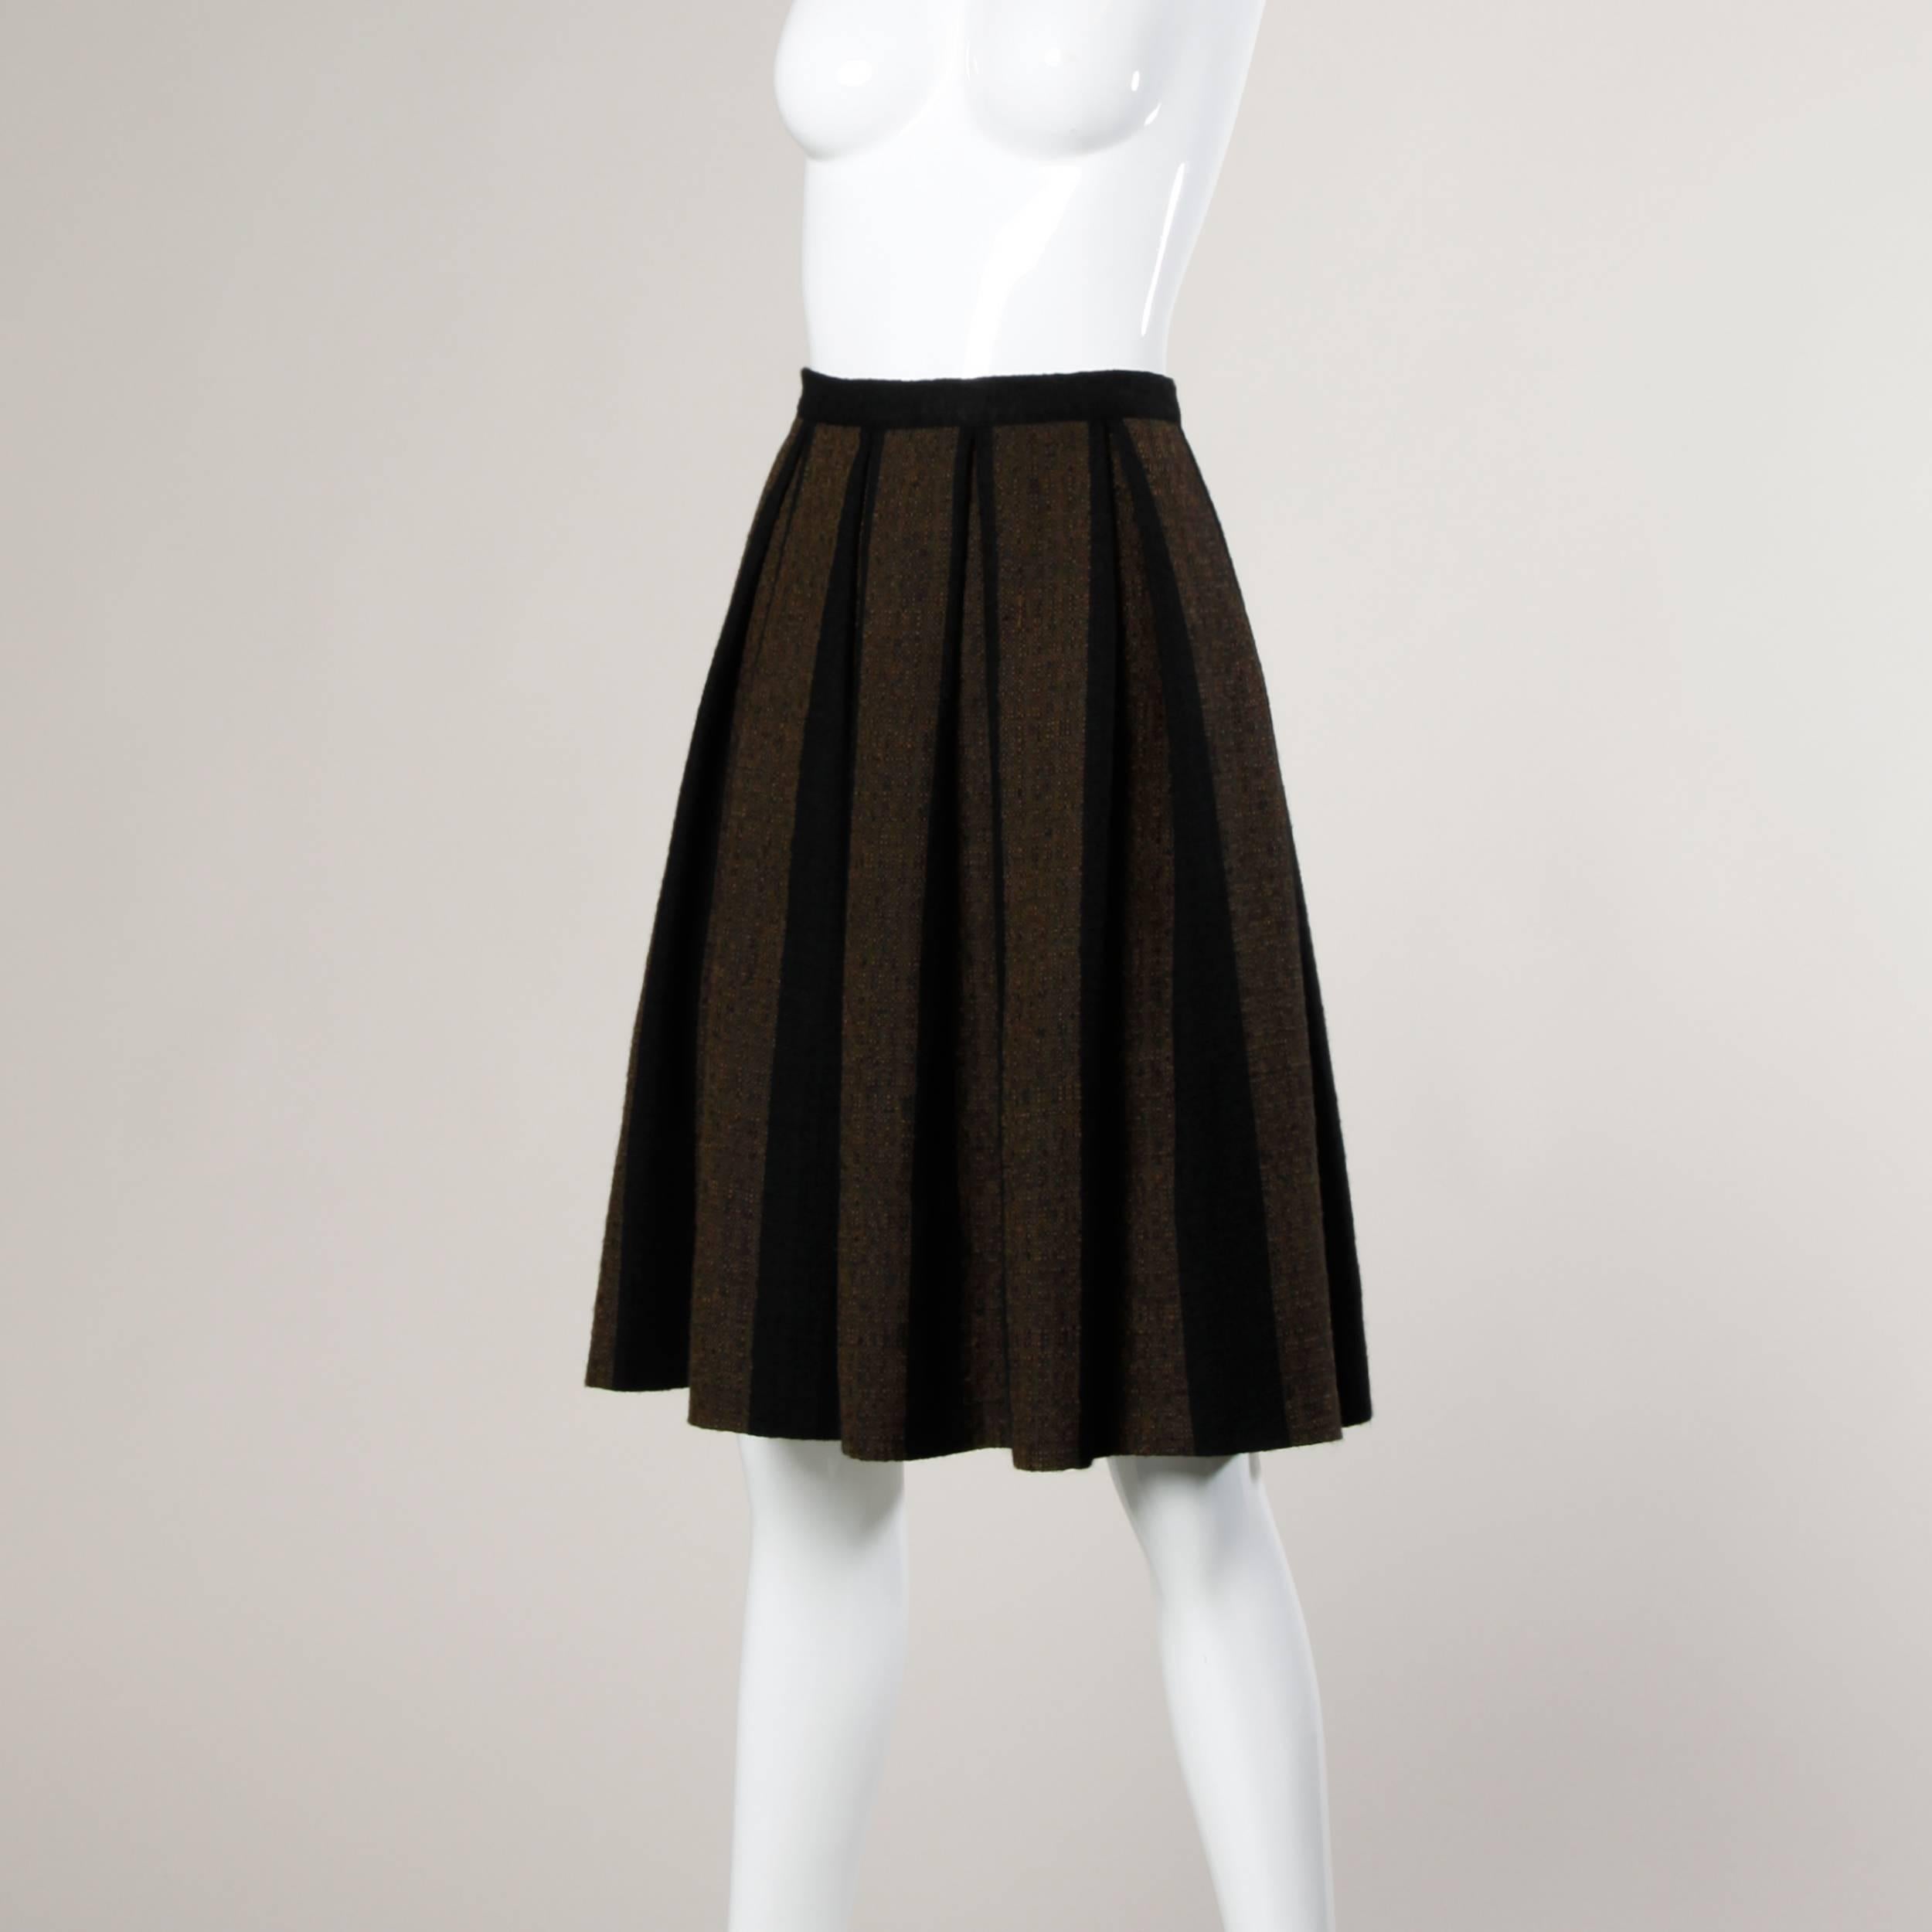 1960s pleated skirt